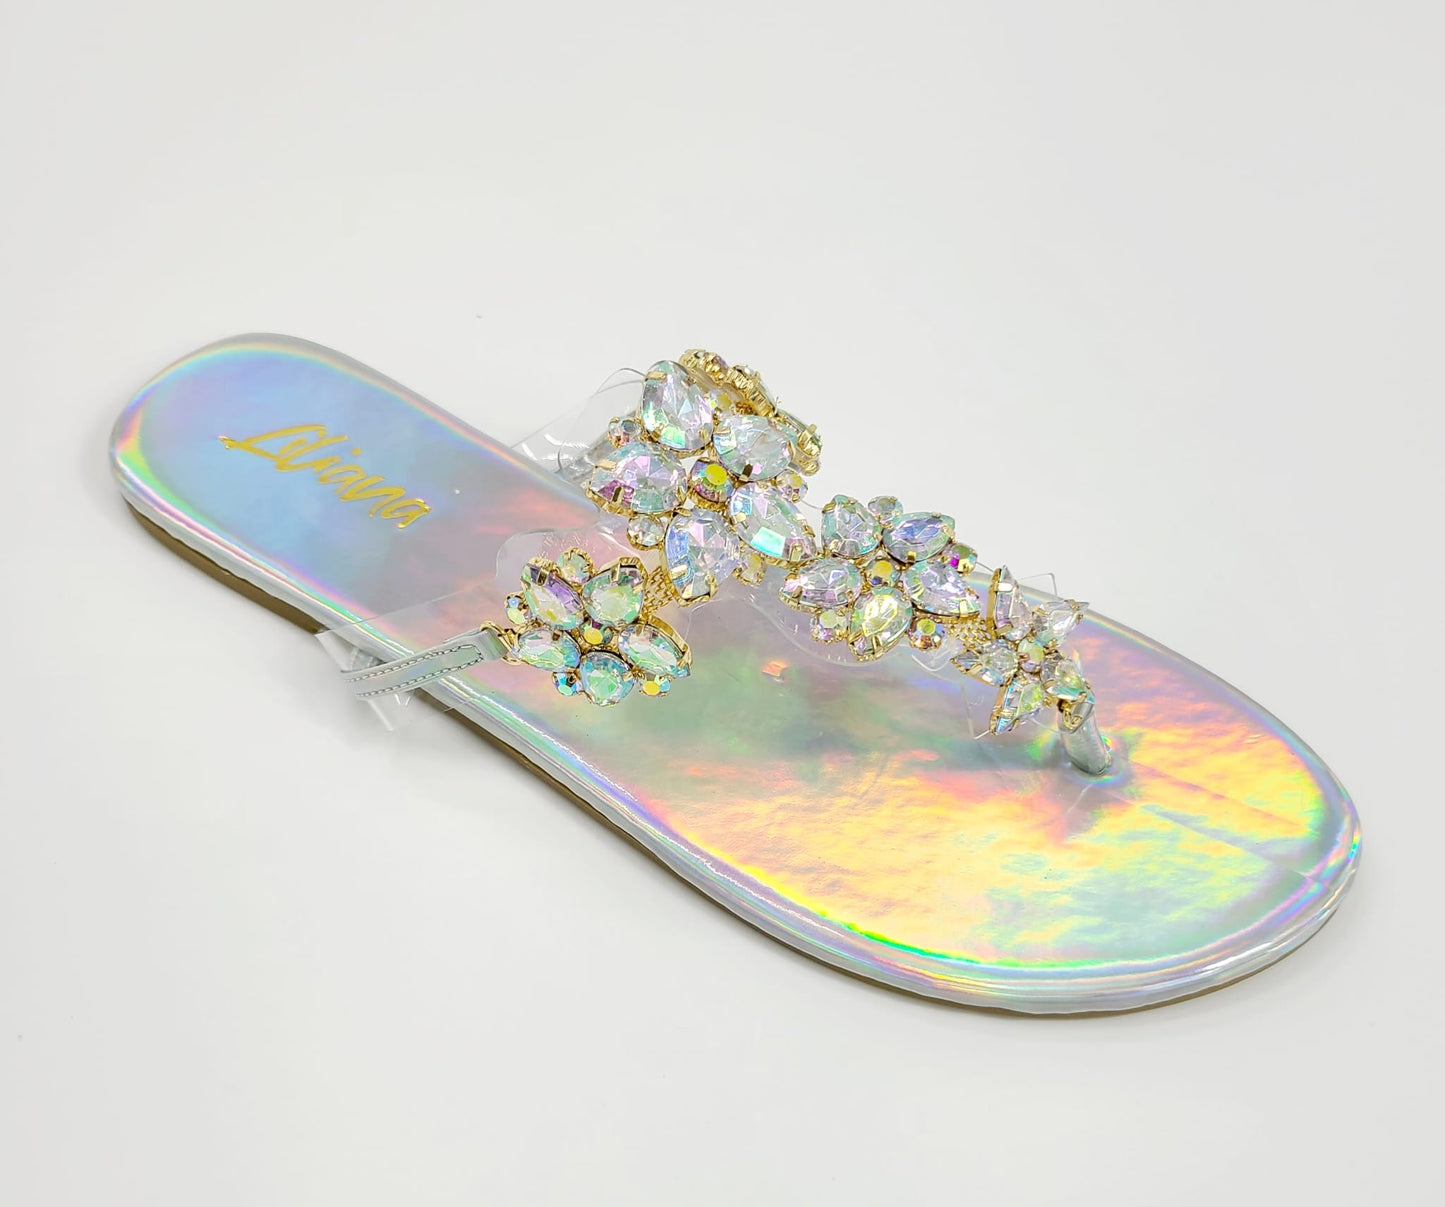 Moly Rhinestone Faux Jeweled Thong Flat Sandals (Silver)